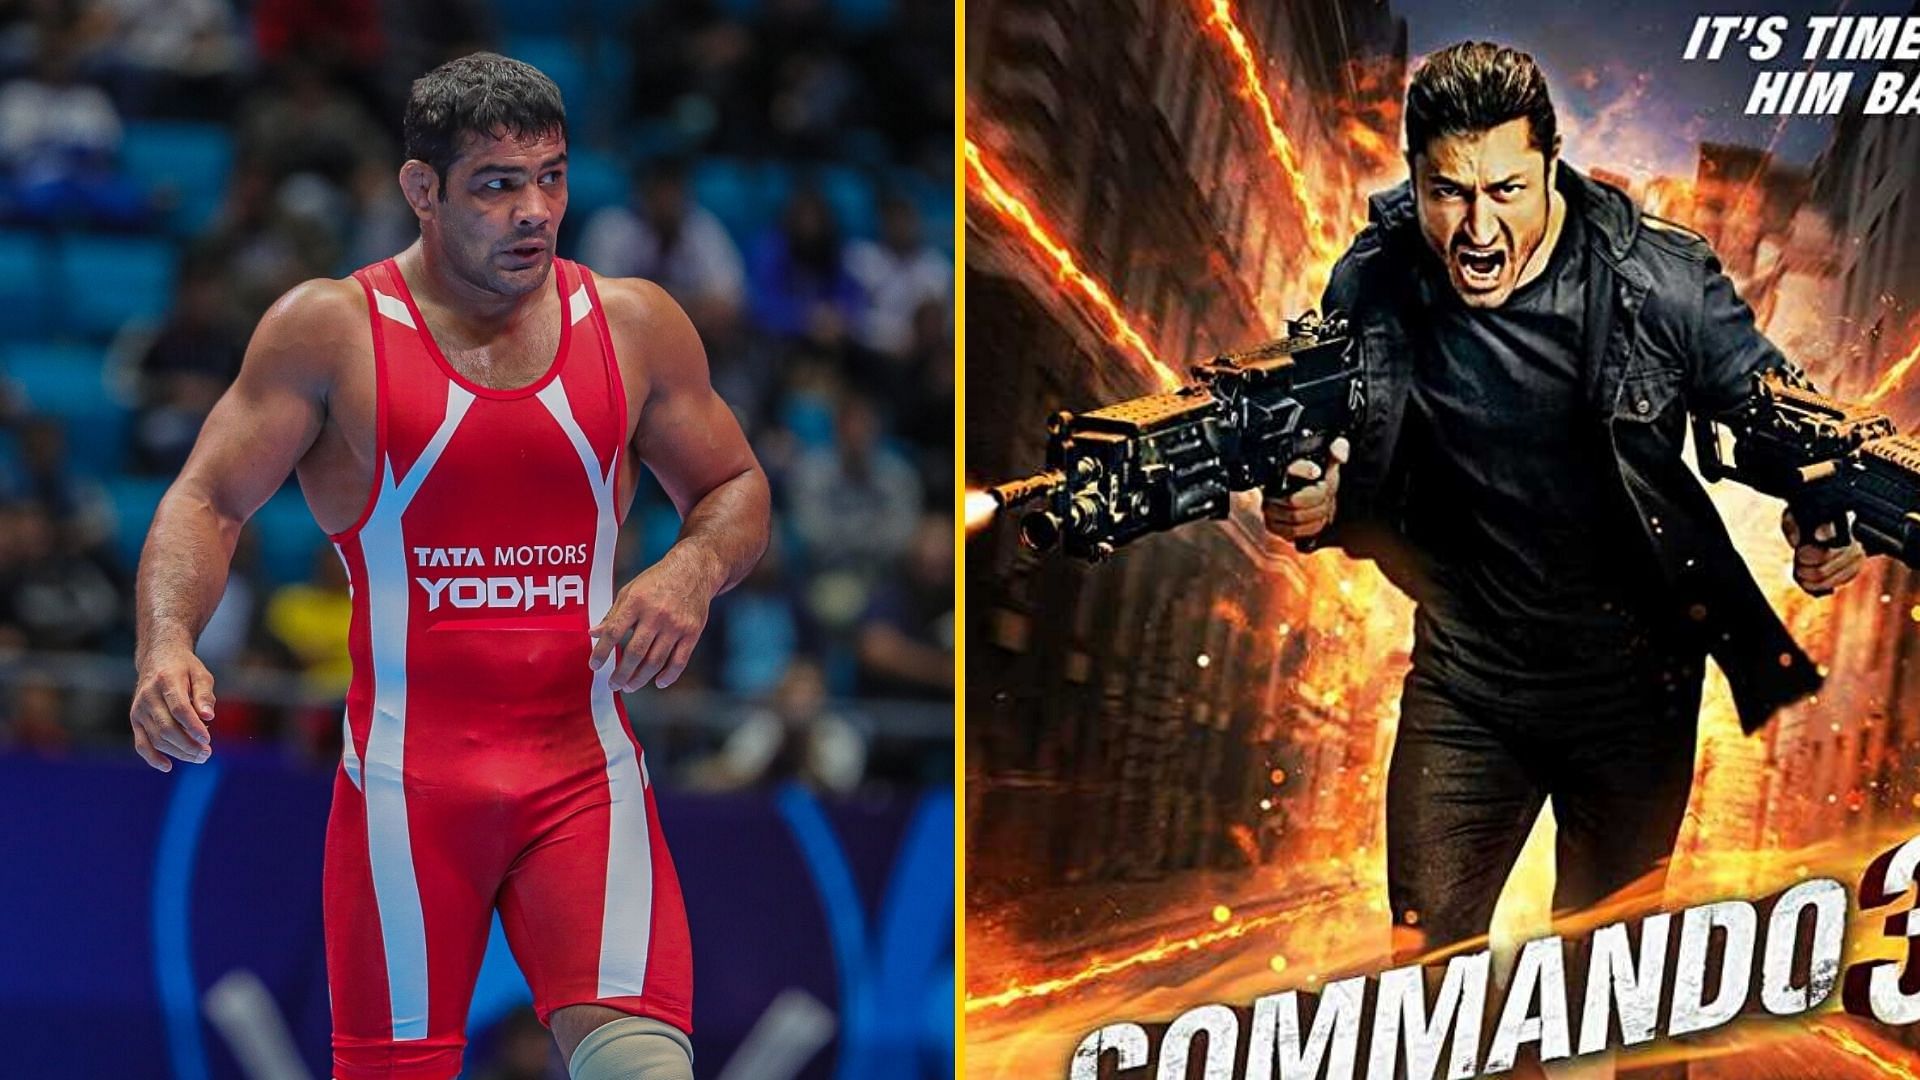 Olympic medalist Sushil Kumar has said <i>Commando 3 </i>shows wrestlers in a bad light.